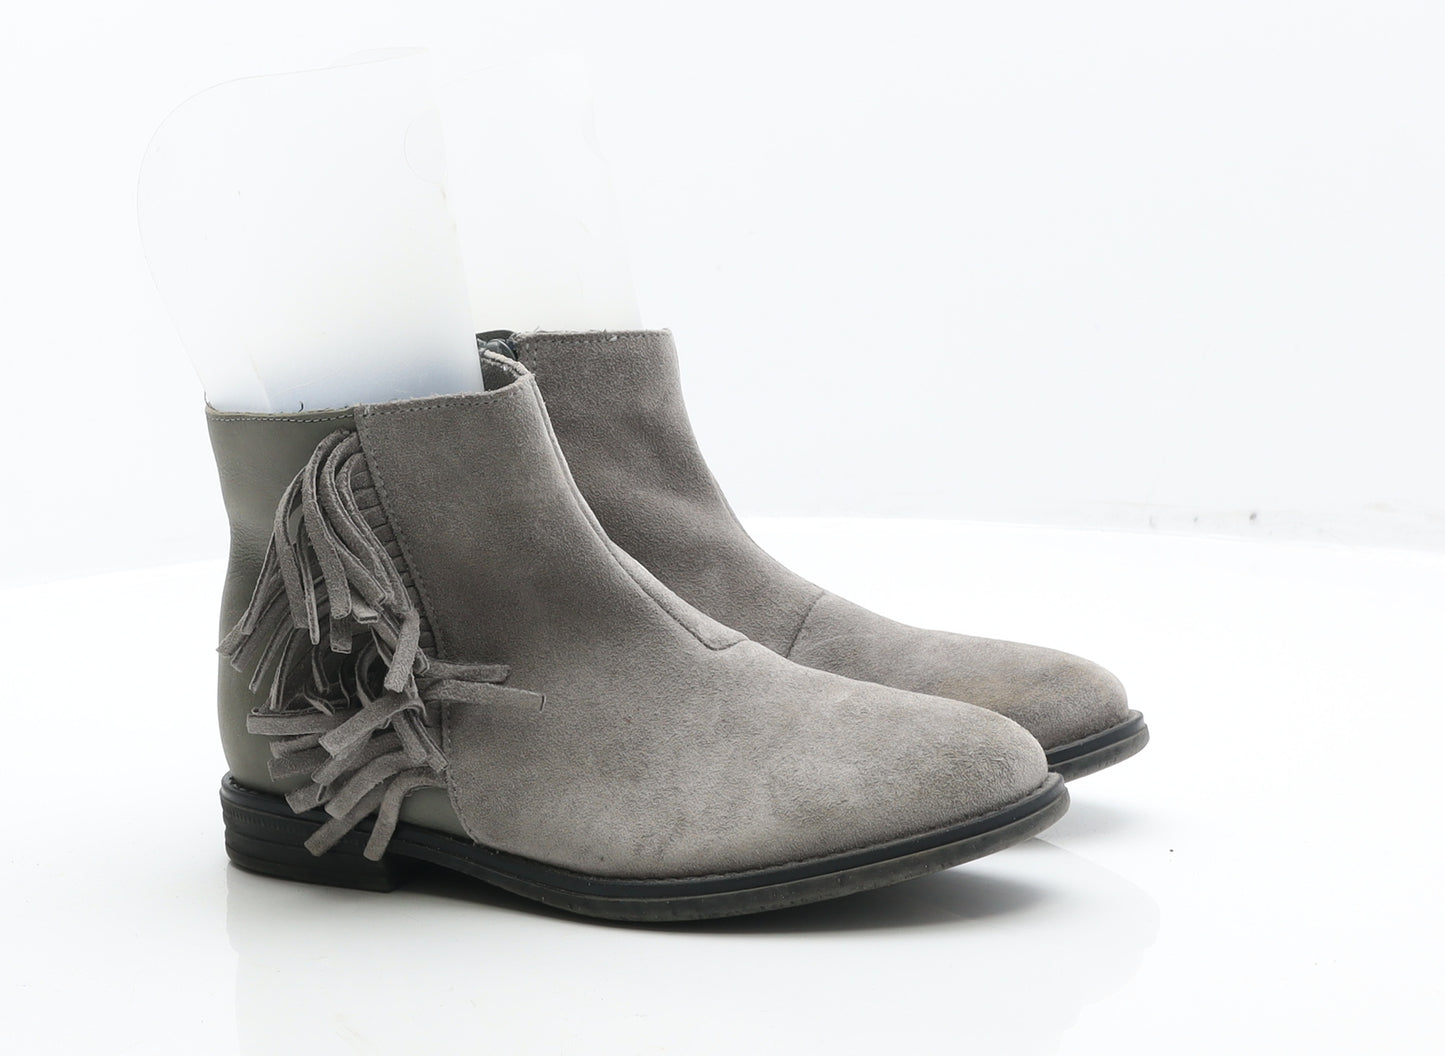 NEXT Womens Grey Leather Cowboy Boot UK 3